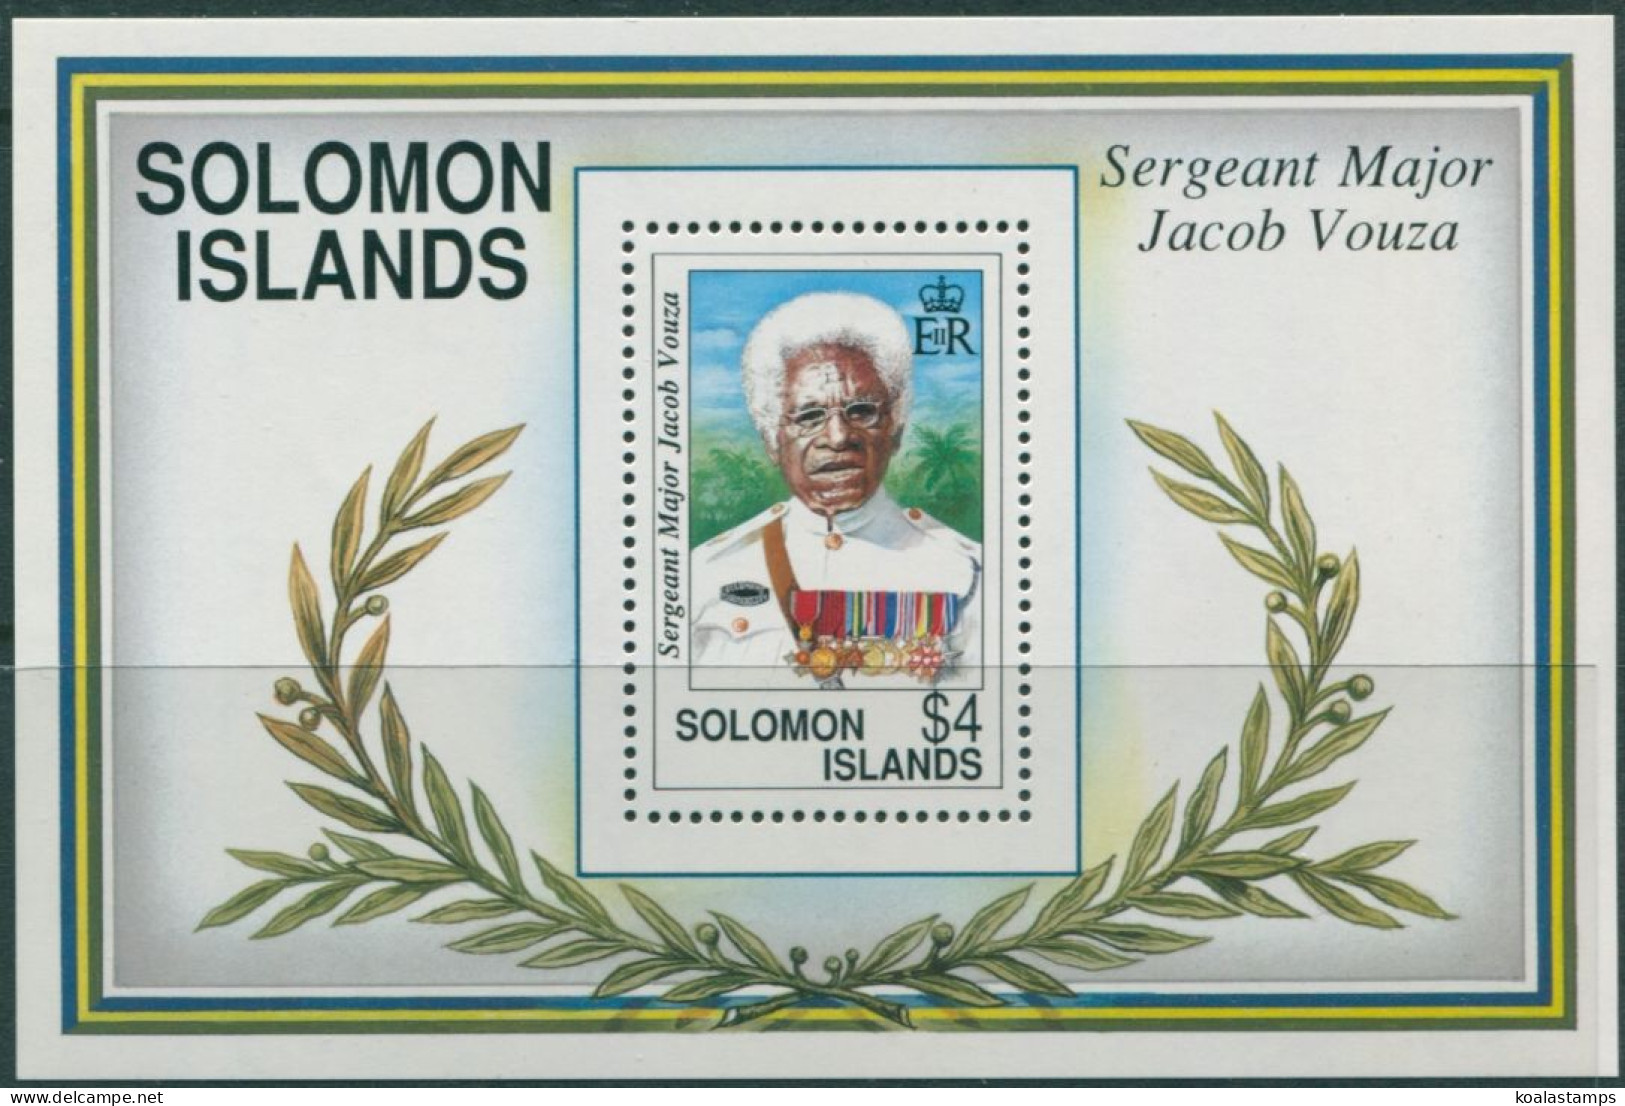 Solomon Islands 1992 SG727 WWII Jacob Vouza MS MNH - Isole Salomone (1978-...)